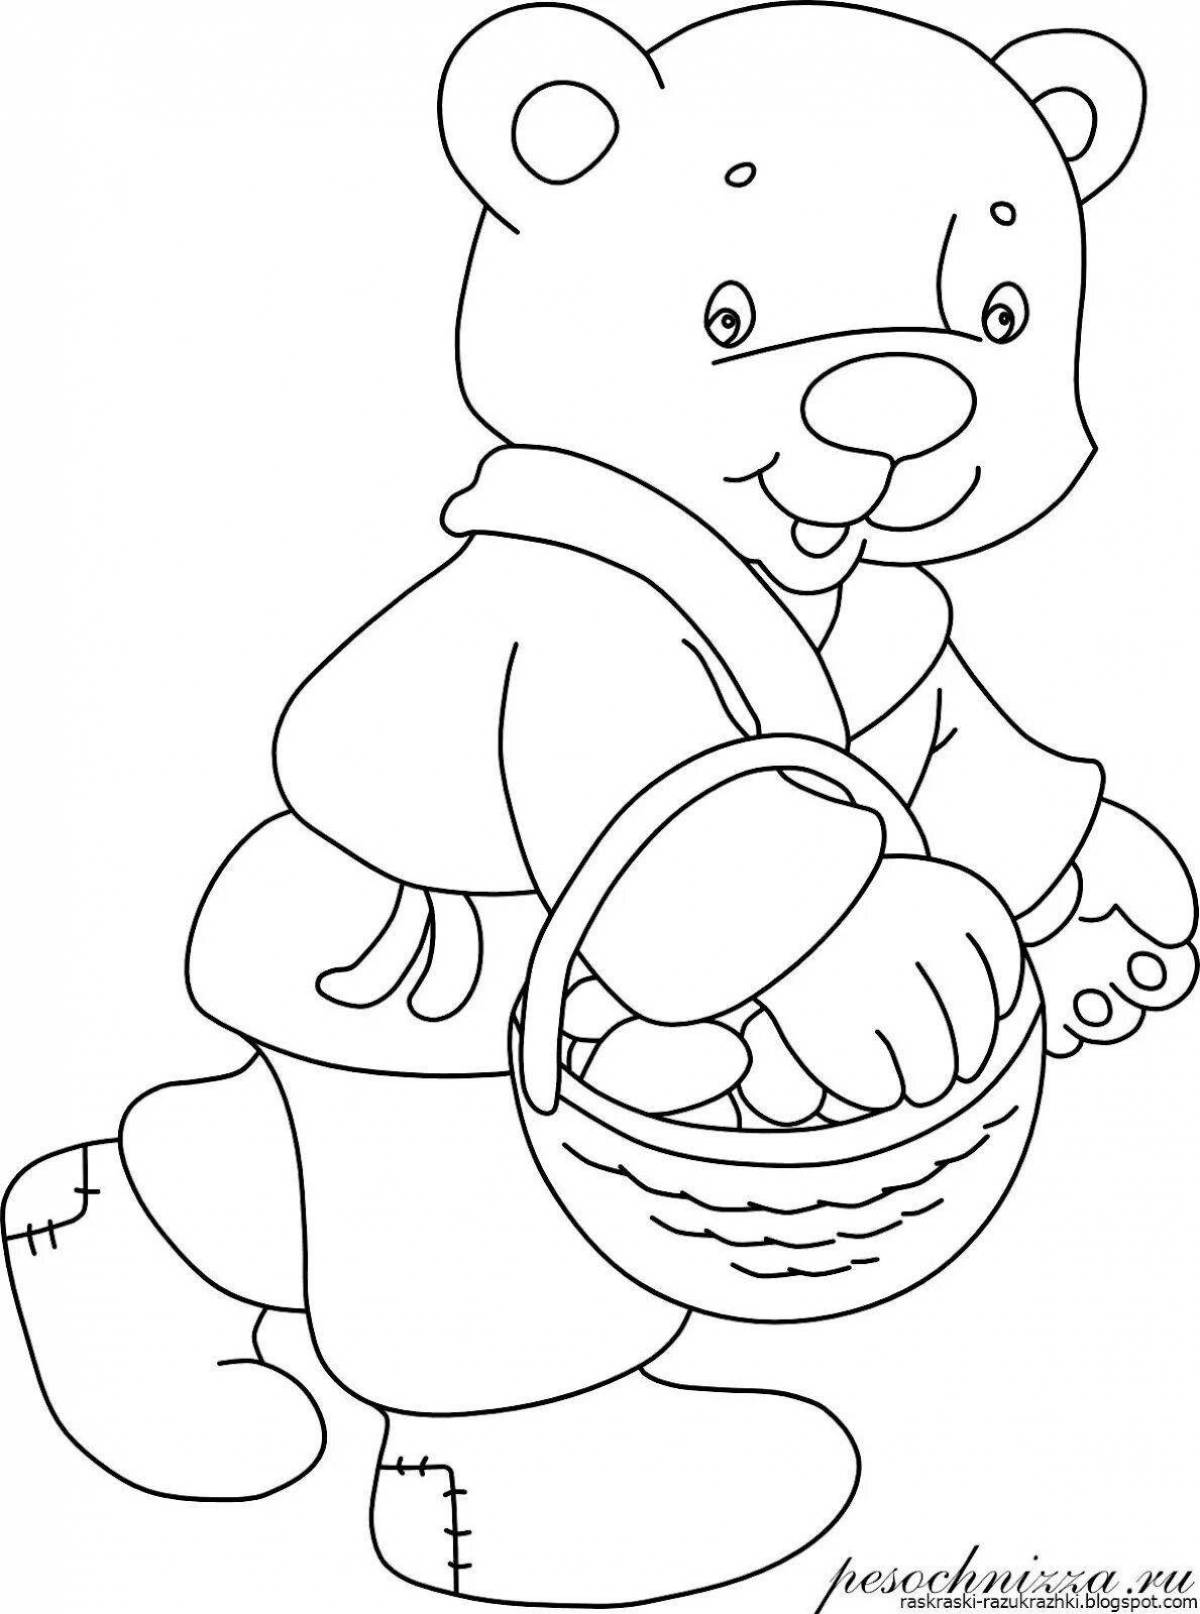 Coloring page charming bear kolobok